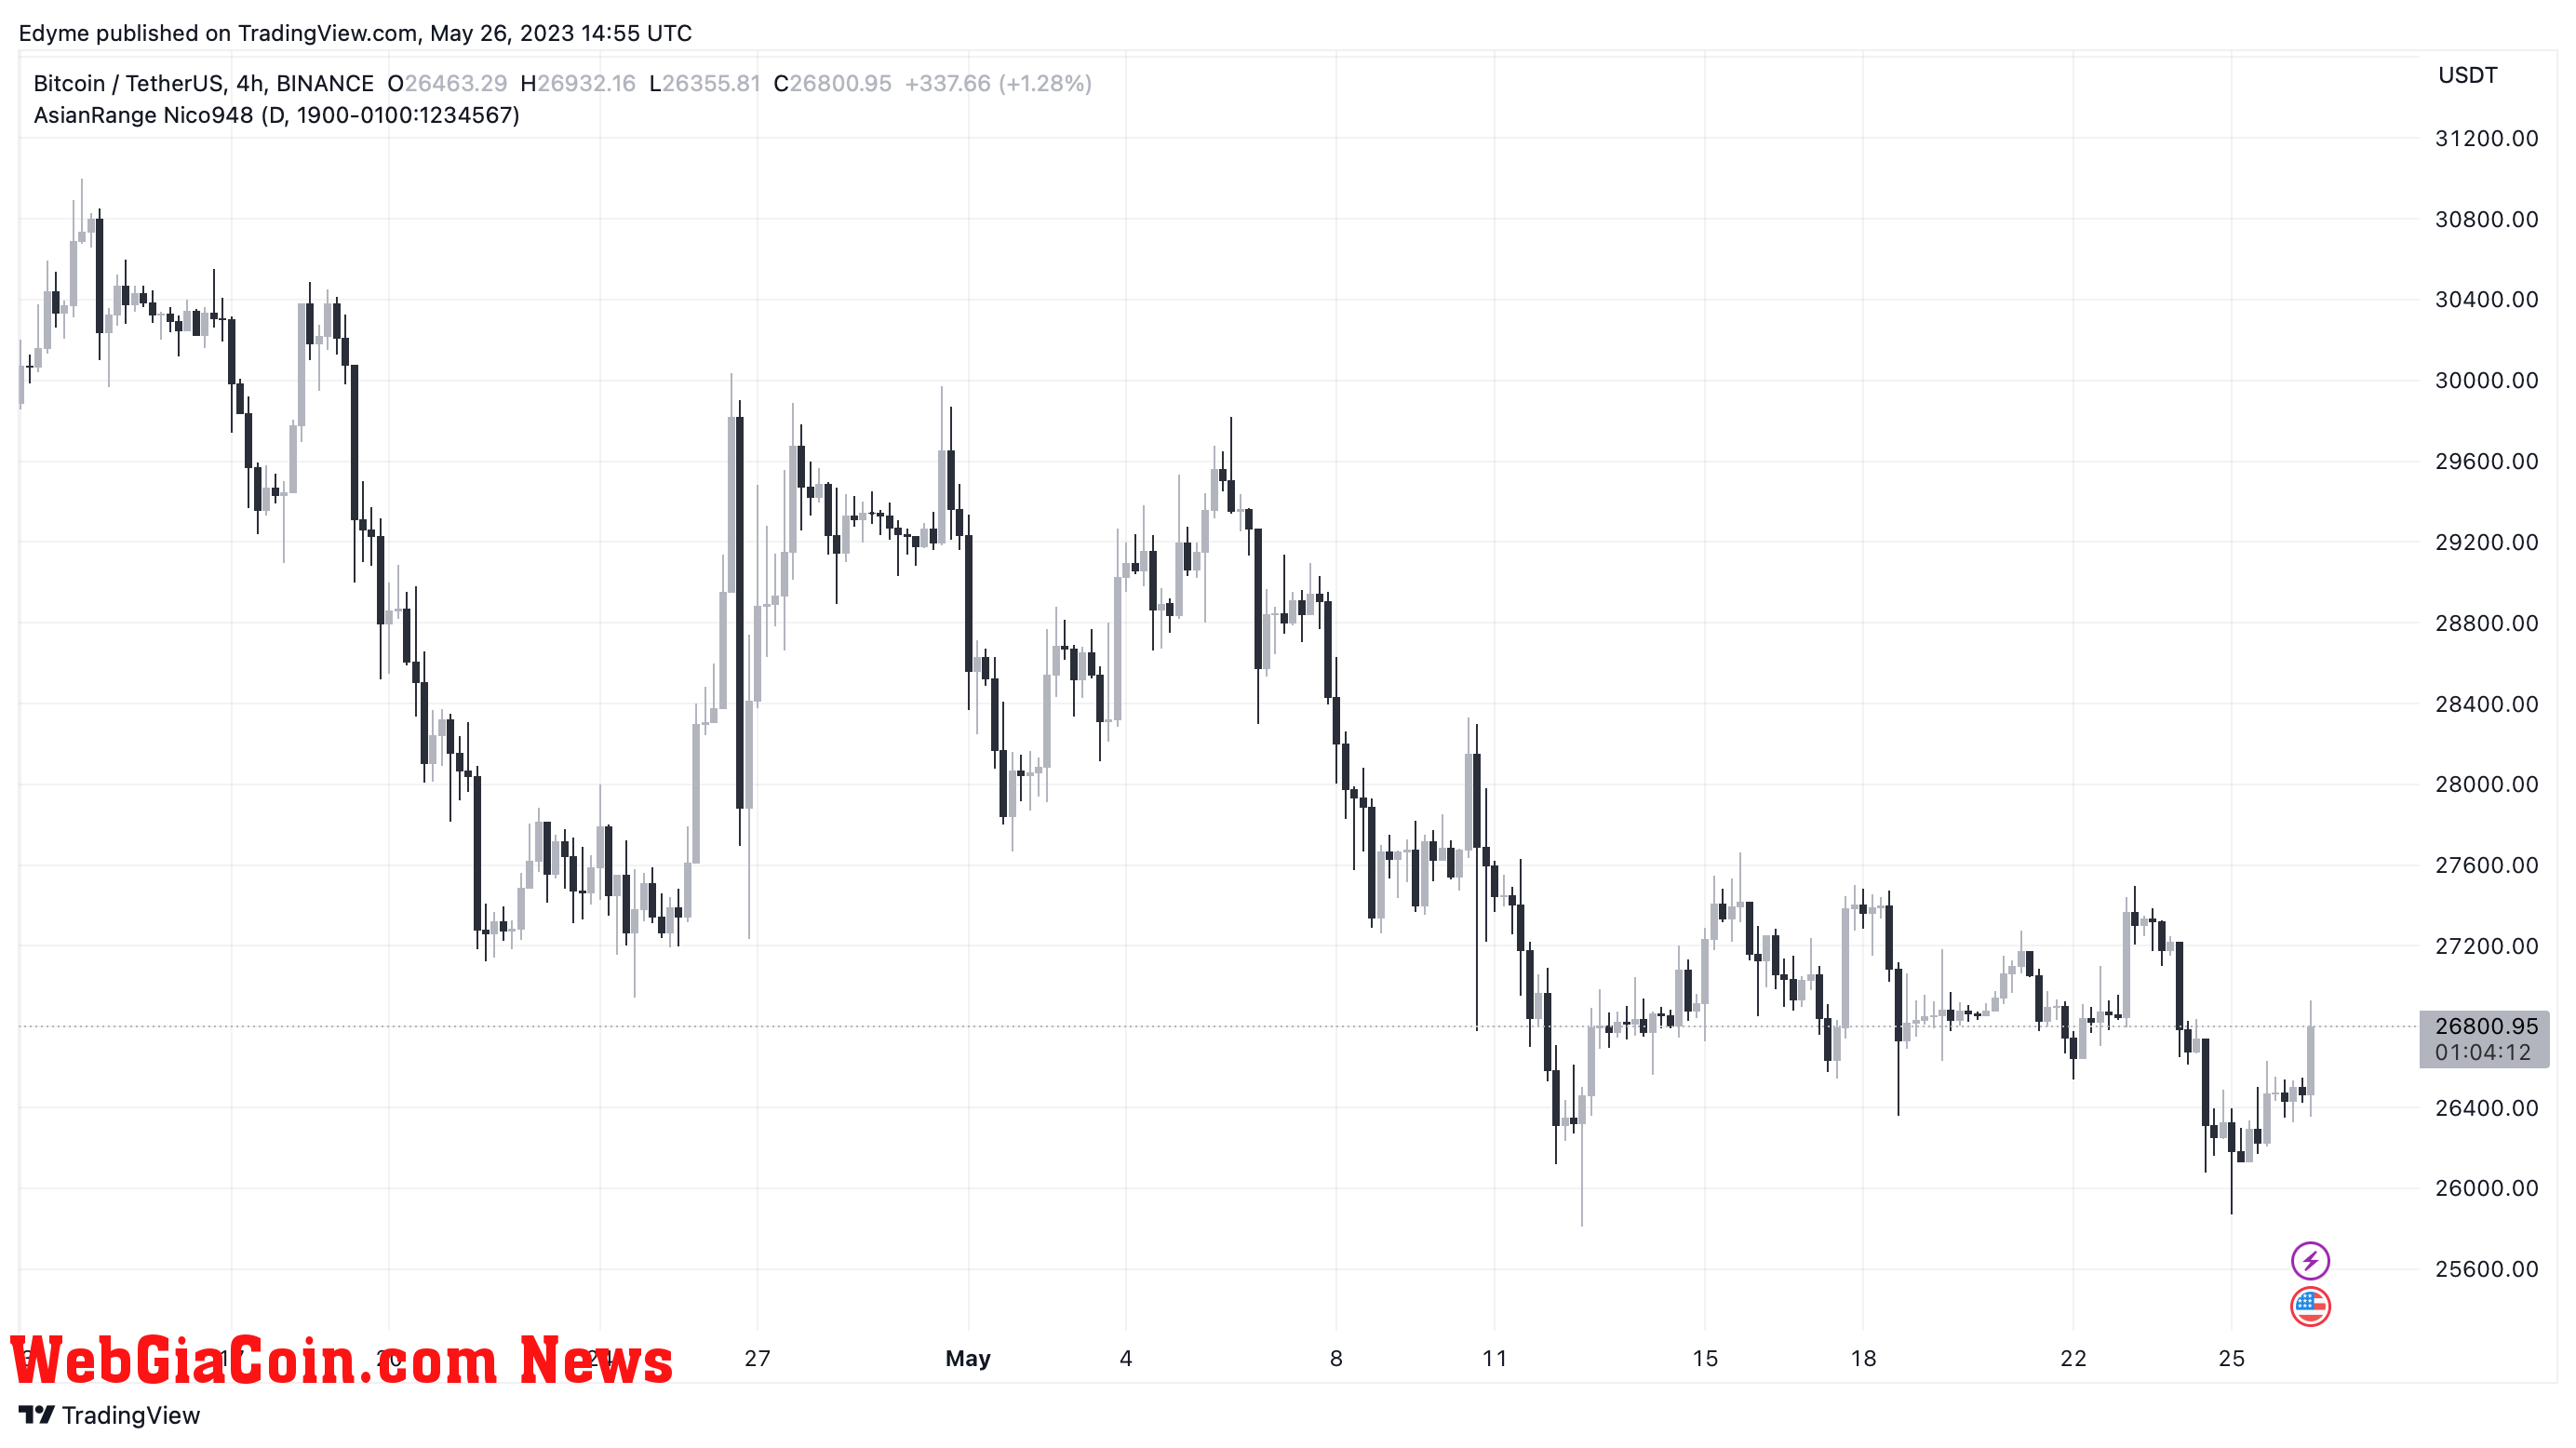 Bitcoin (BTC)’s price chart on TradingView